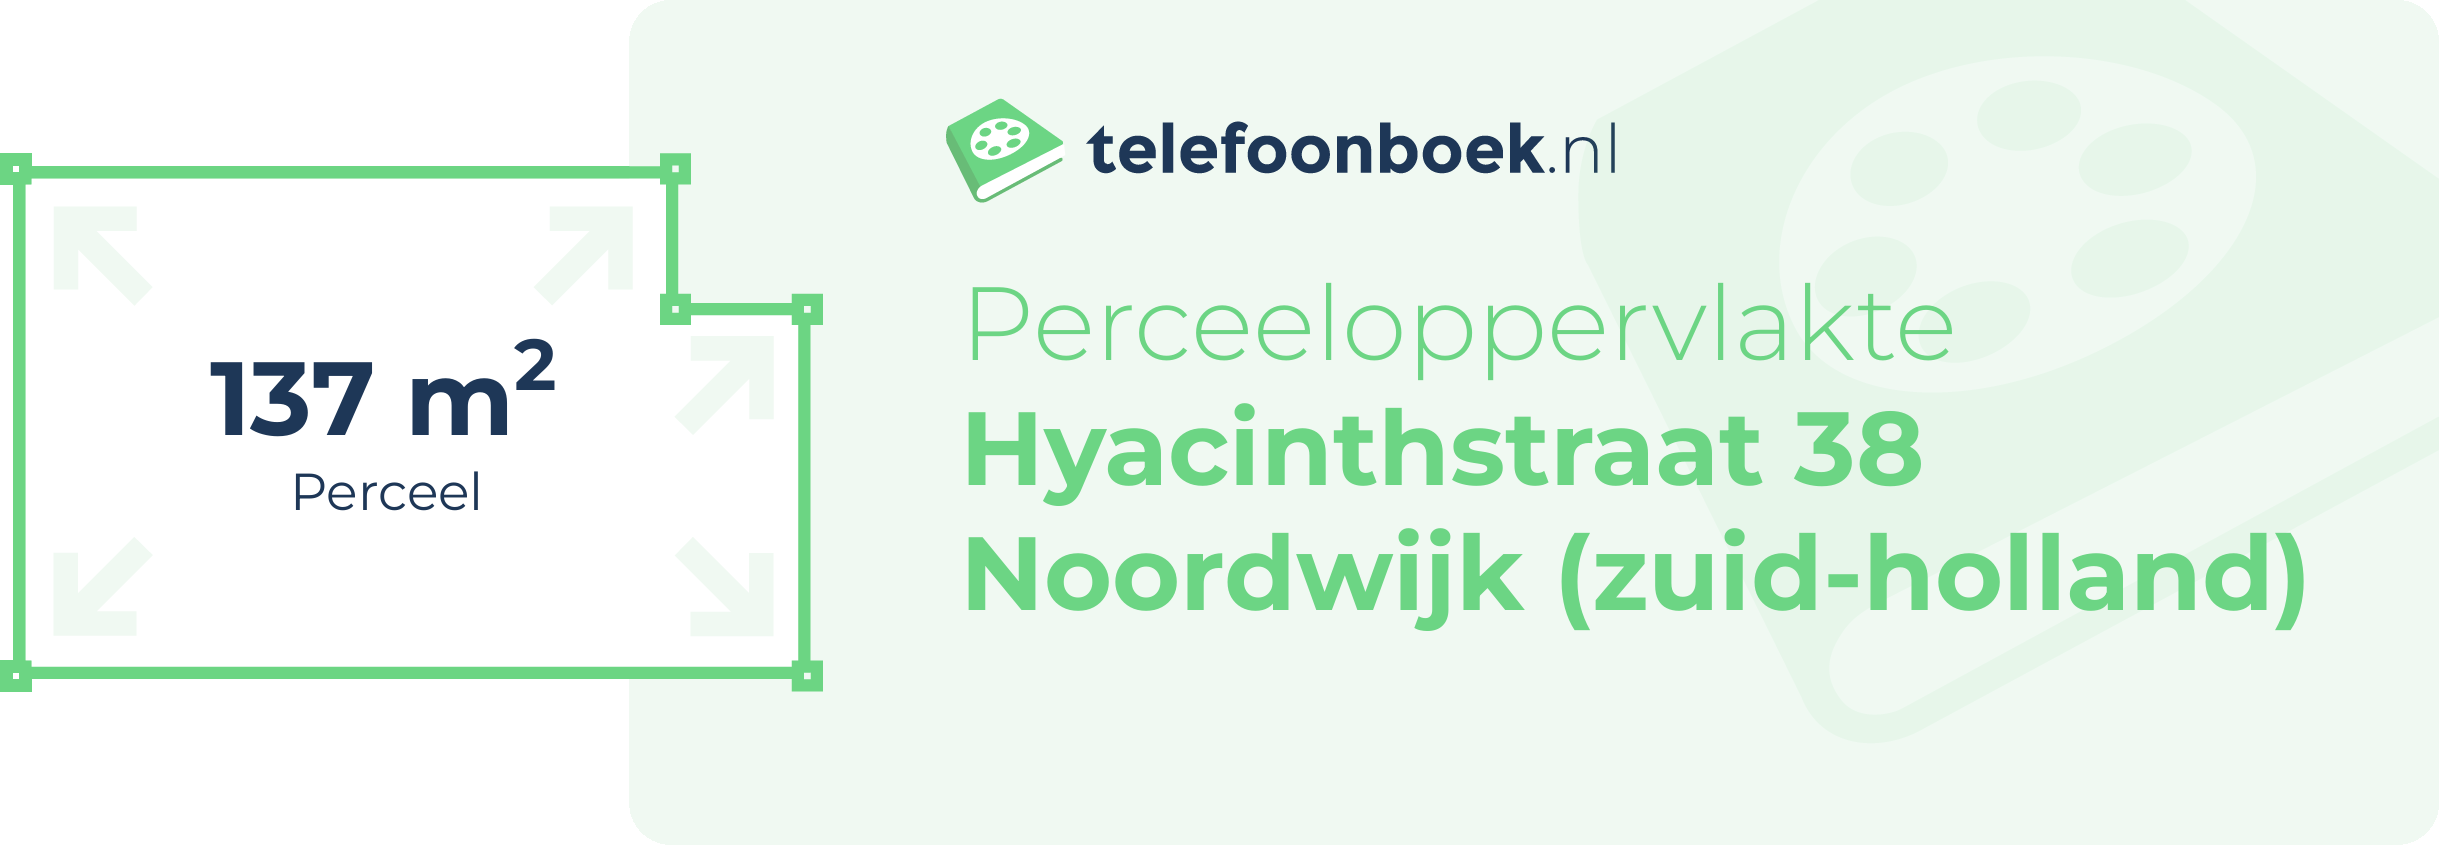 Perceeloppervlakte Hyacinthstraat 38 Noordwijk (Zuid-Holland)